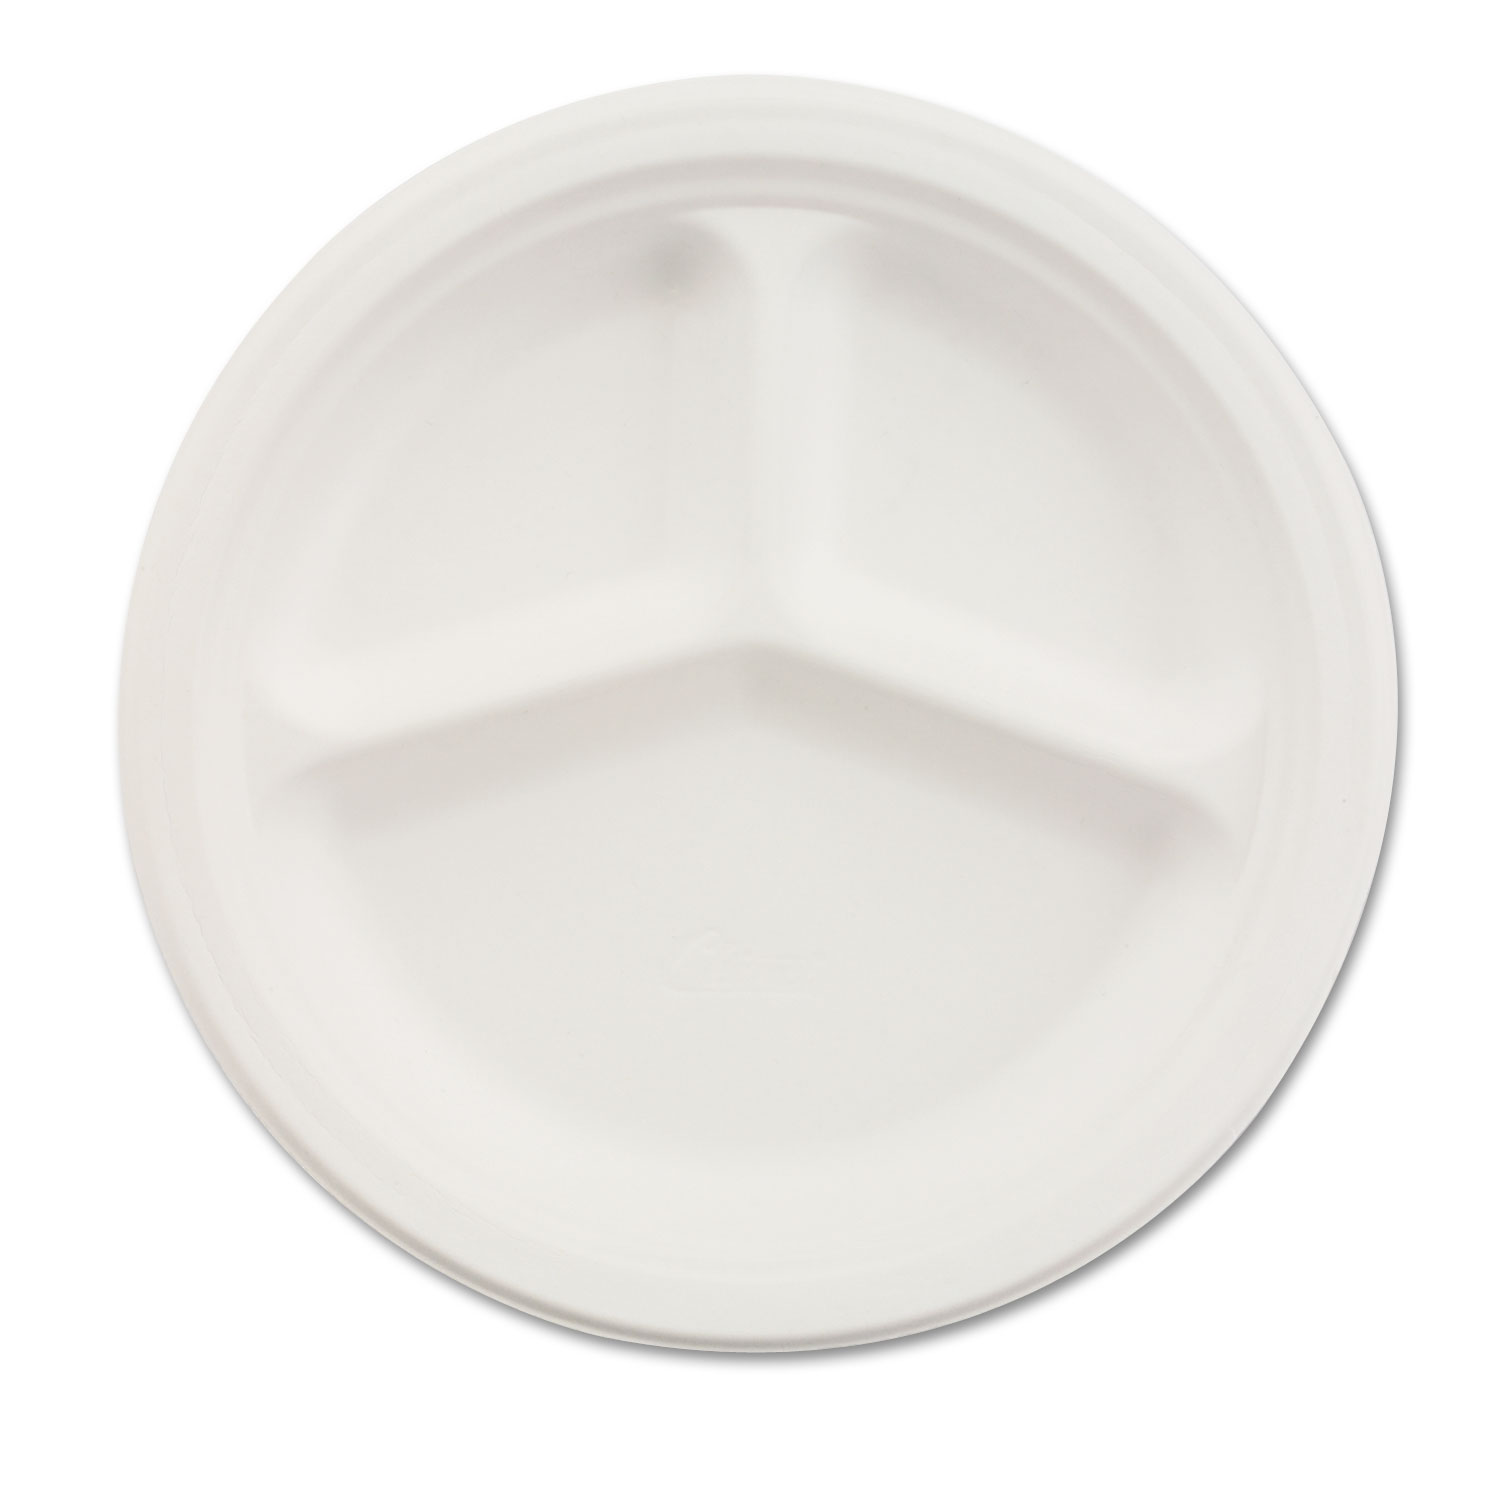  Chinet 21228 Paper Dinnerware, 3-Comp Plate, 9 1/4 dia, White, 500/Carton (HUH21228) 